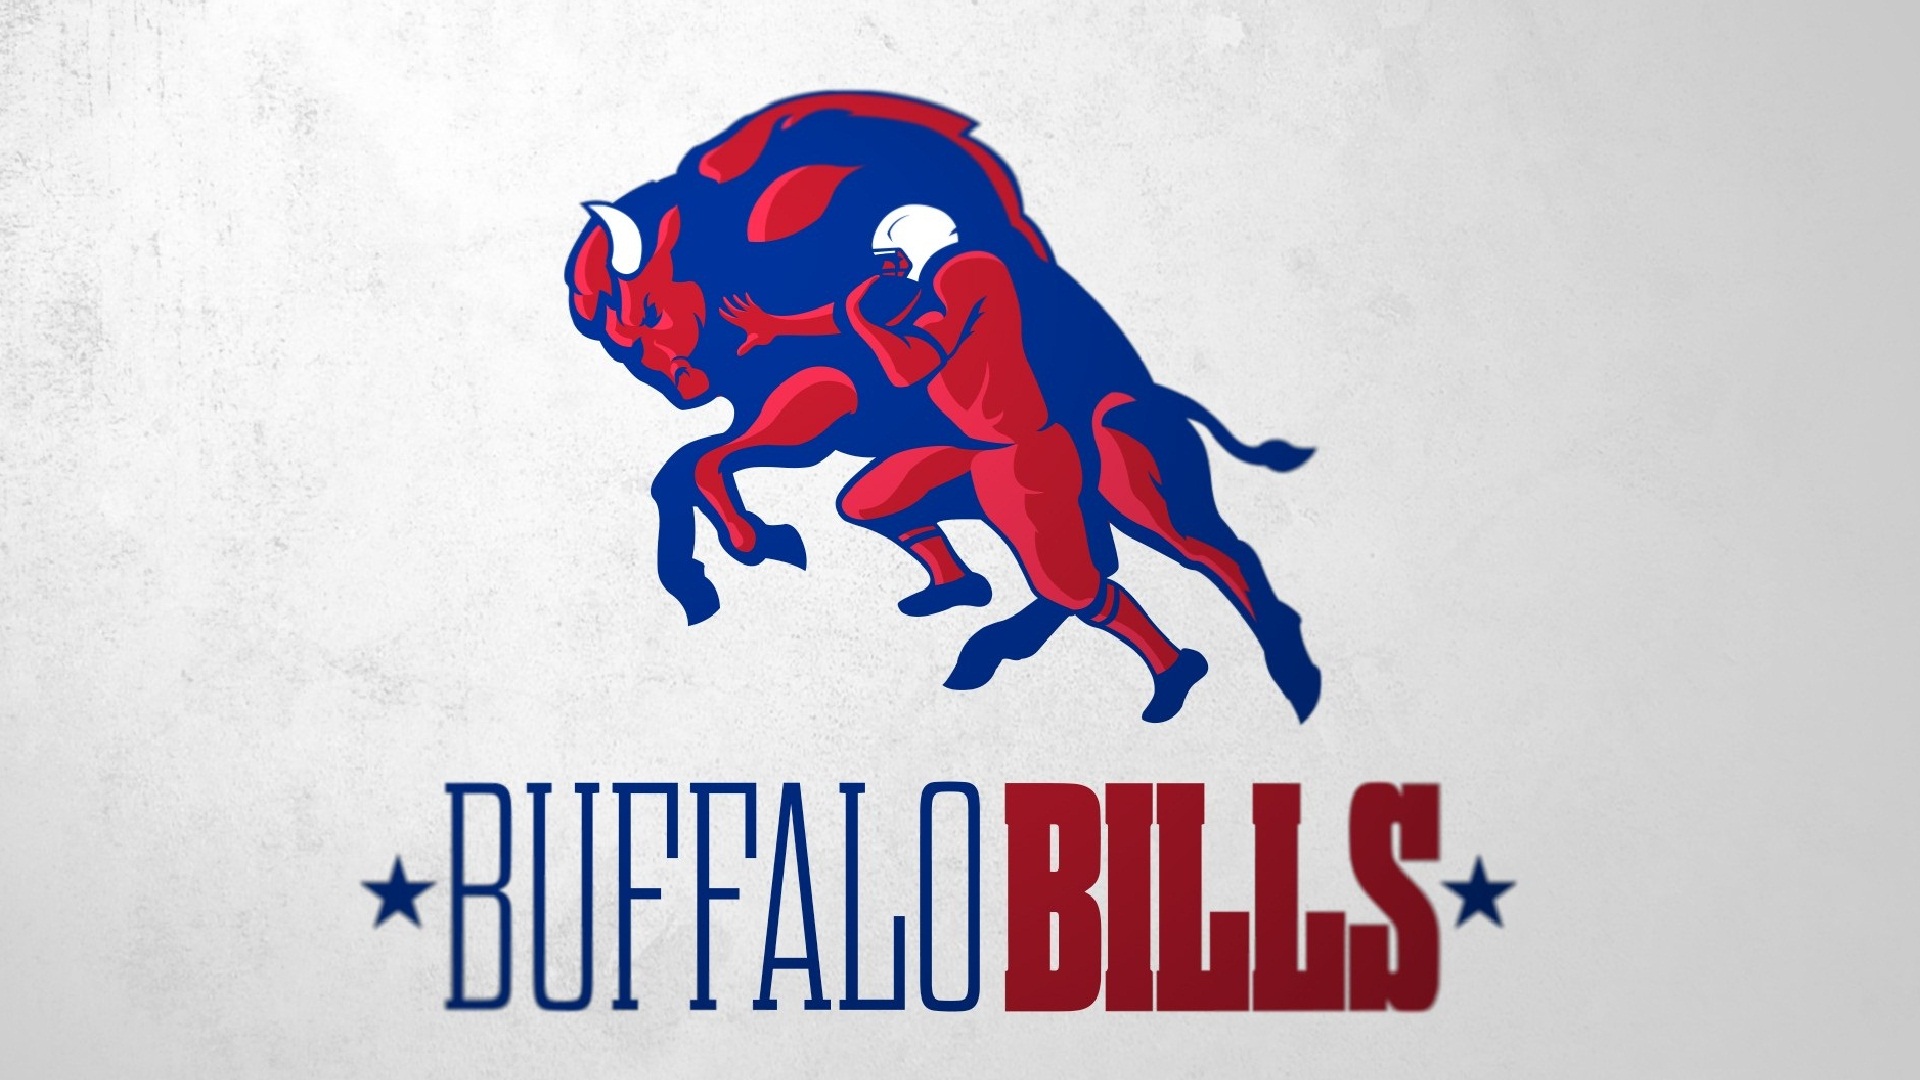 Buffalo Bills For Mac 1920x1080